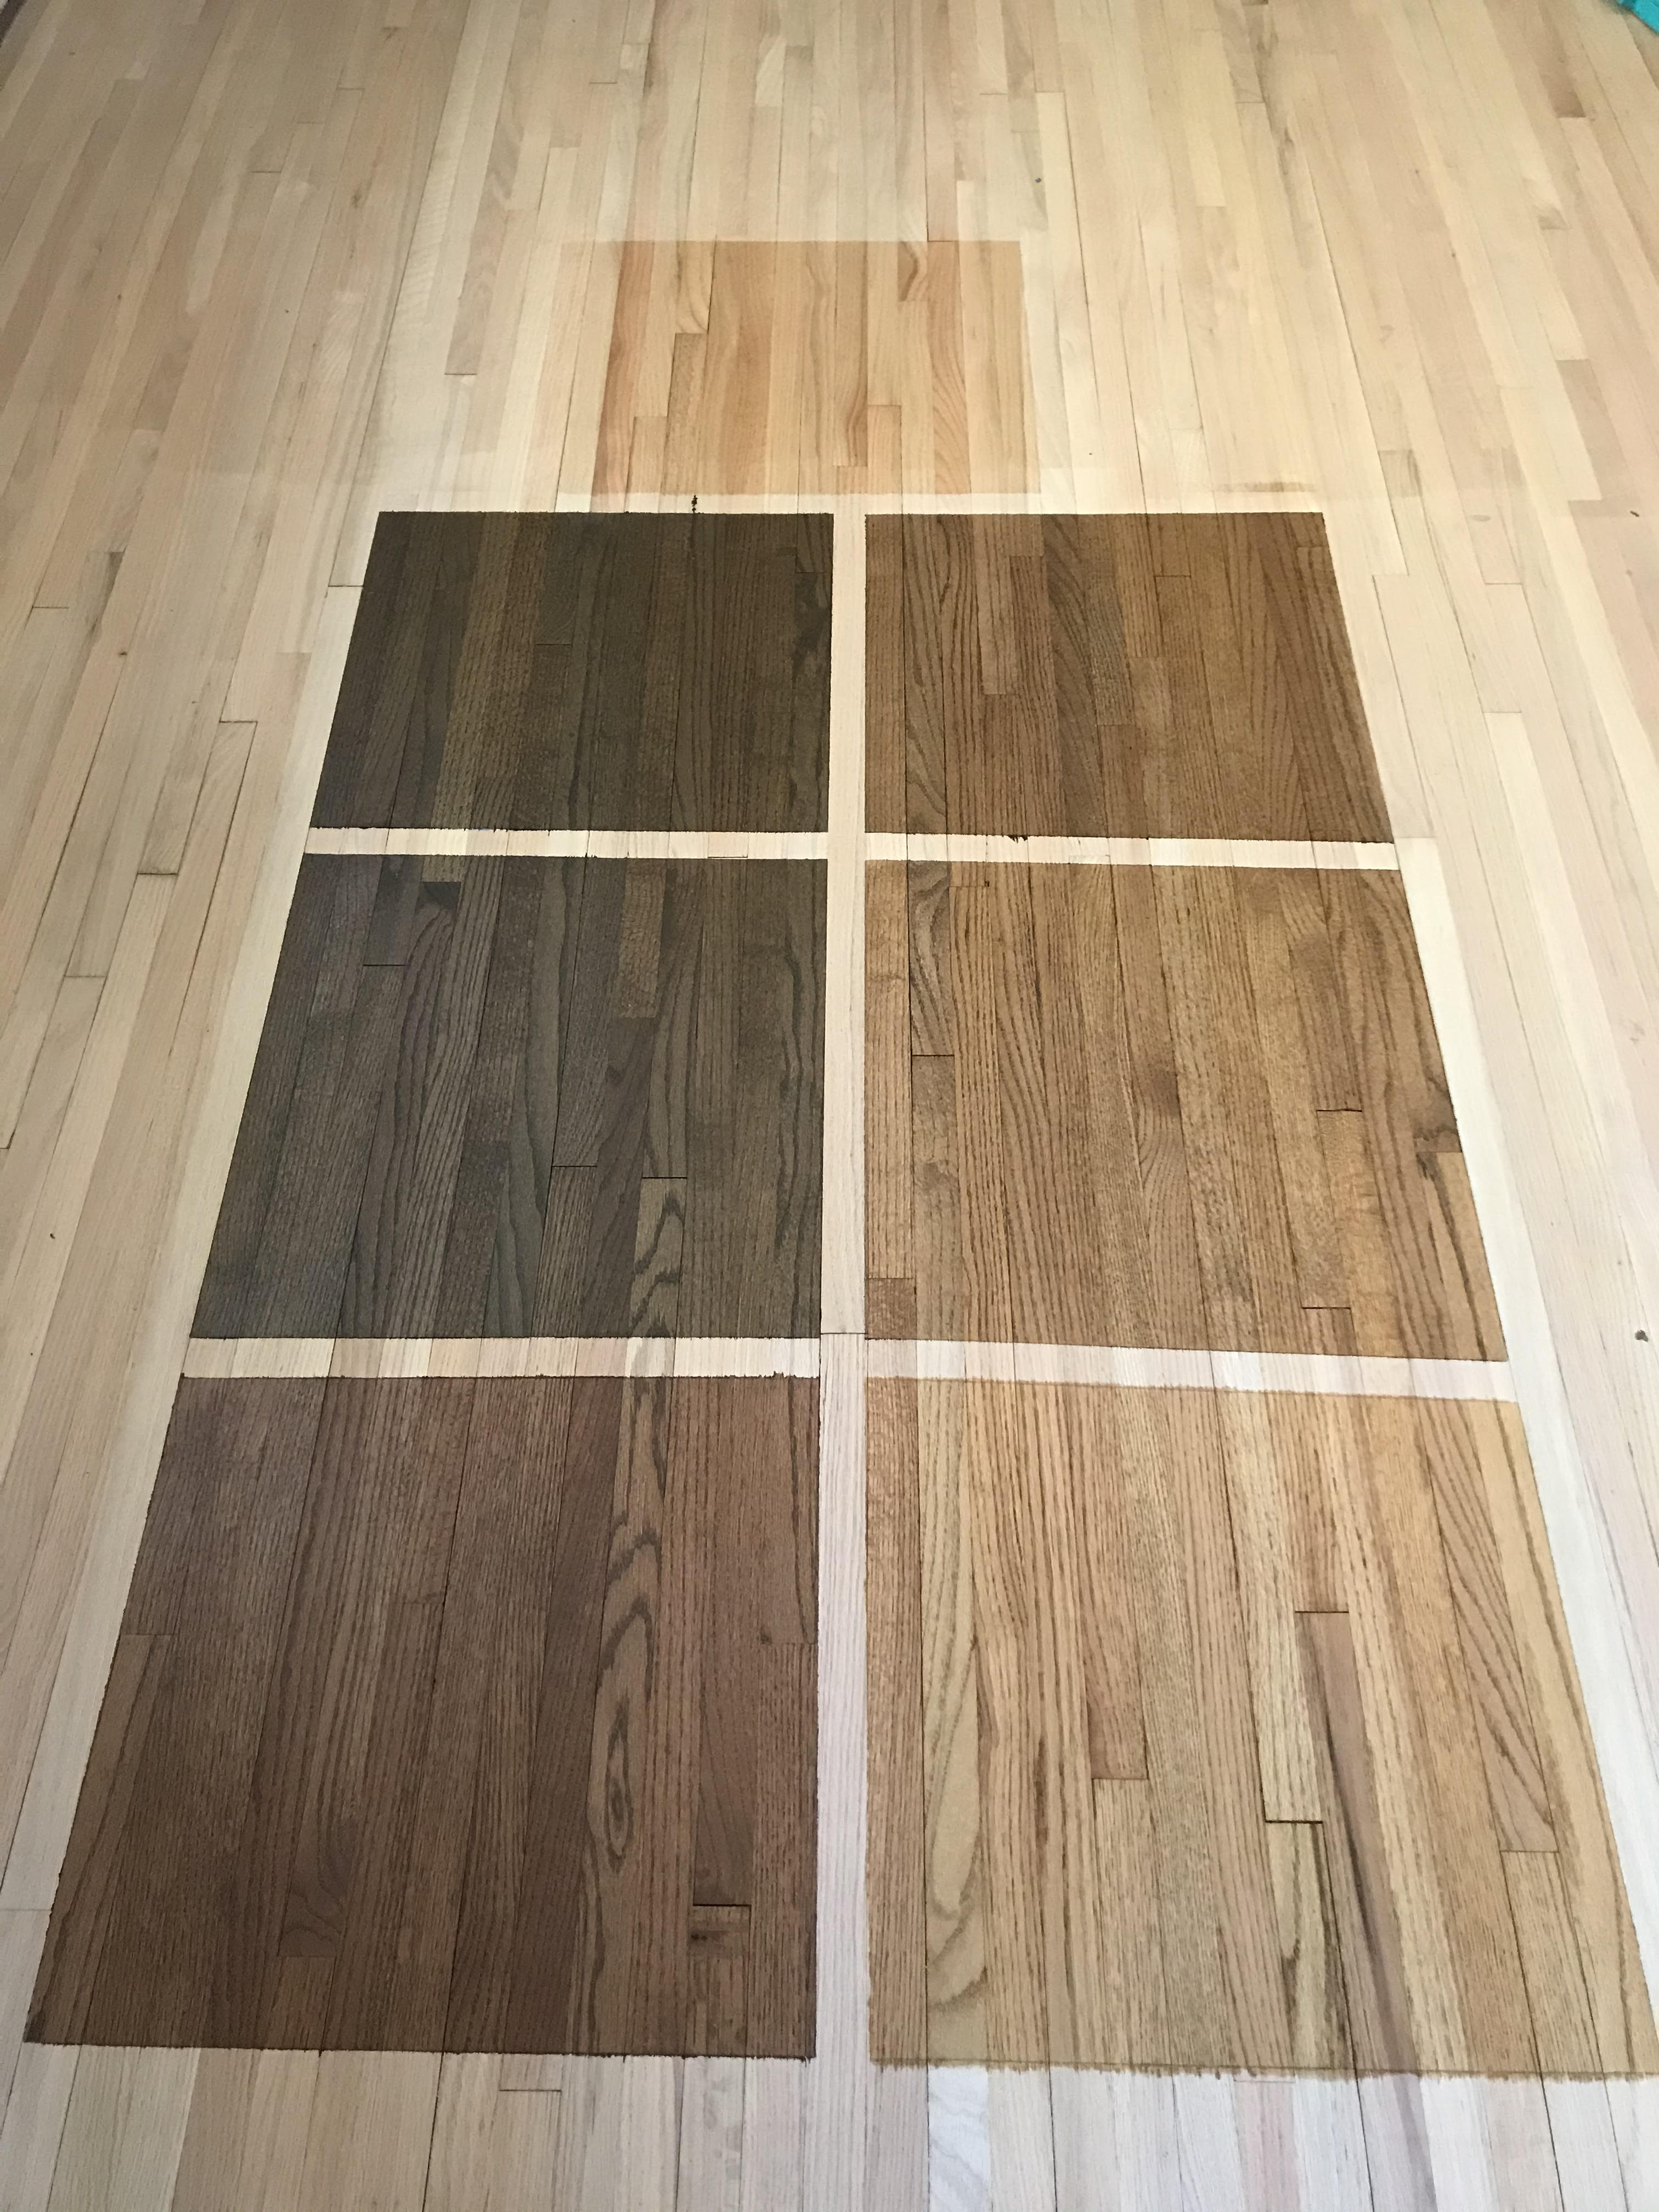 Hardwood Floor Refinishing Ub, Recoating Hardwood Floors